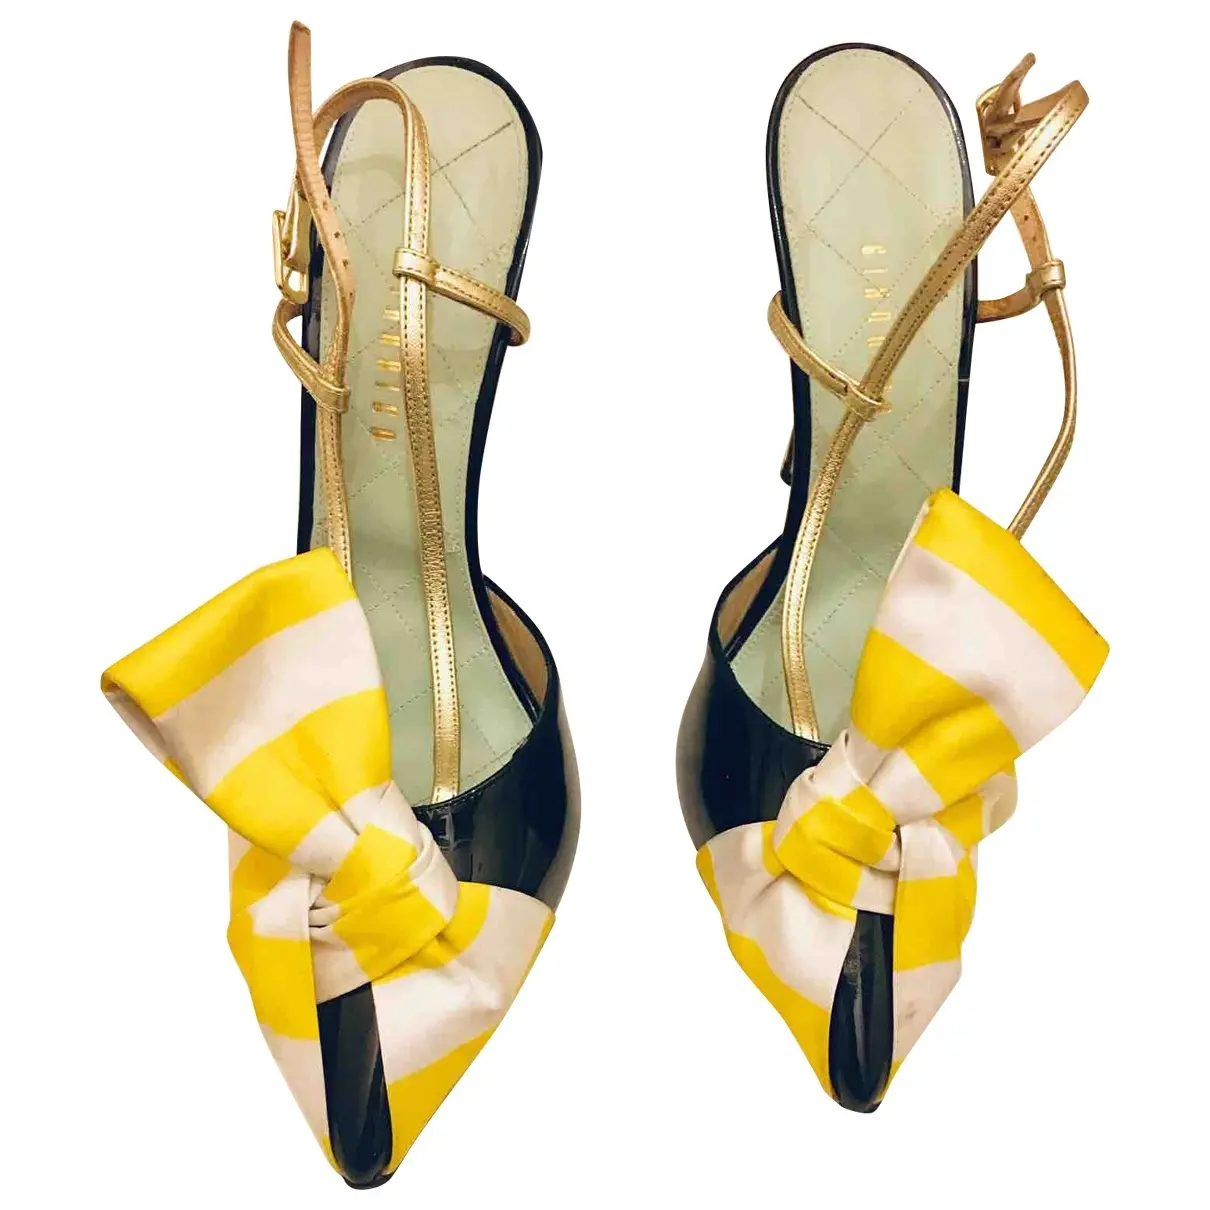 Patent leather heels Giannico